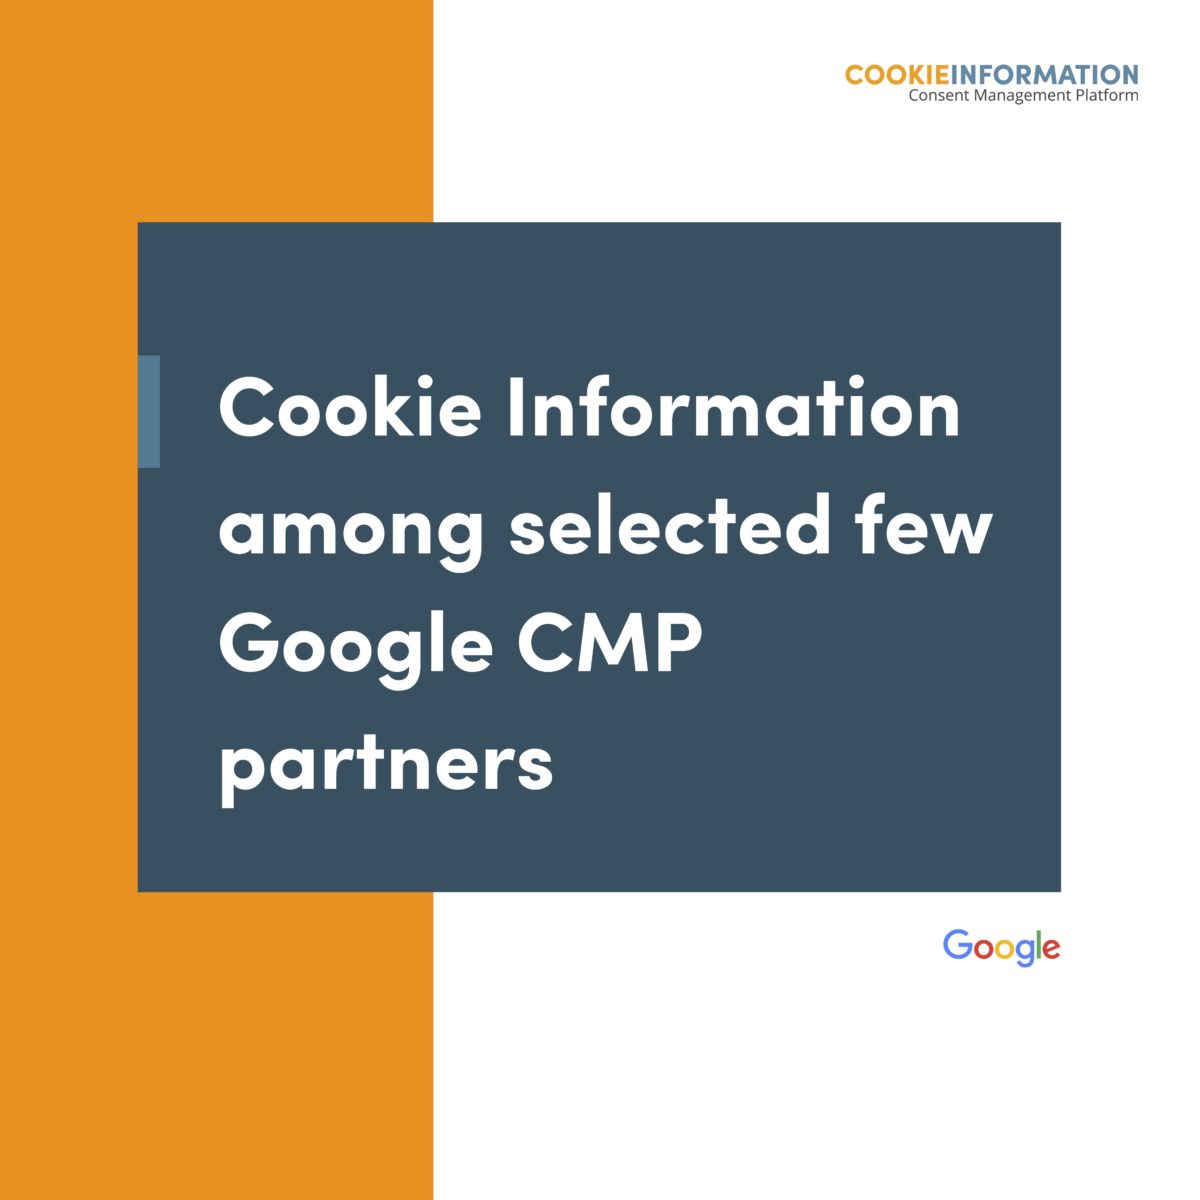 Cookie Information among selected few Google Consent Management Platform Partners